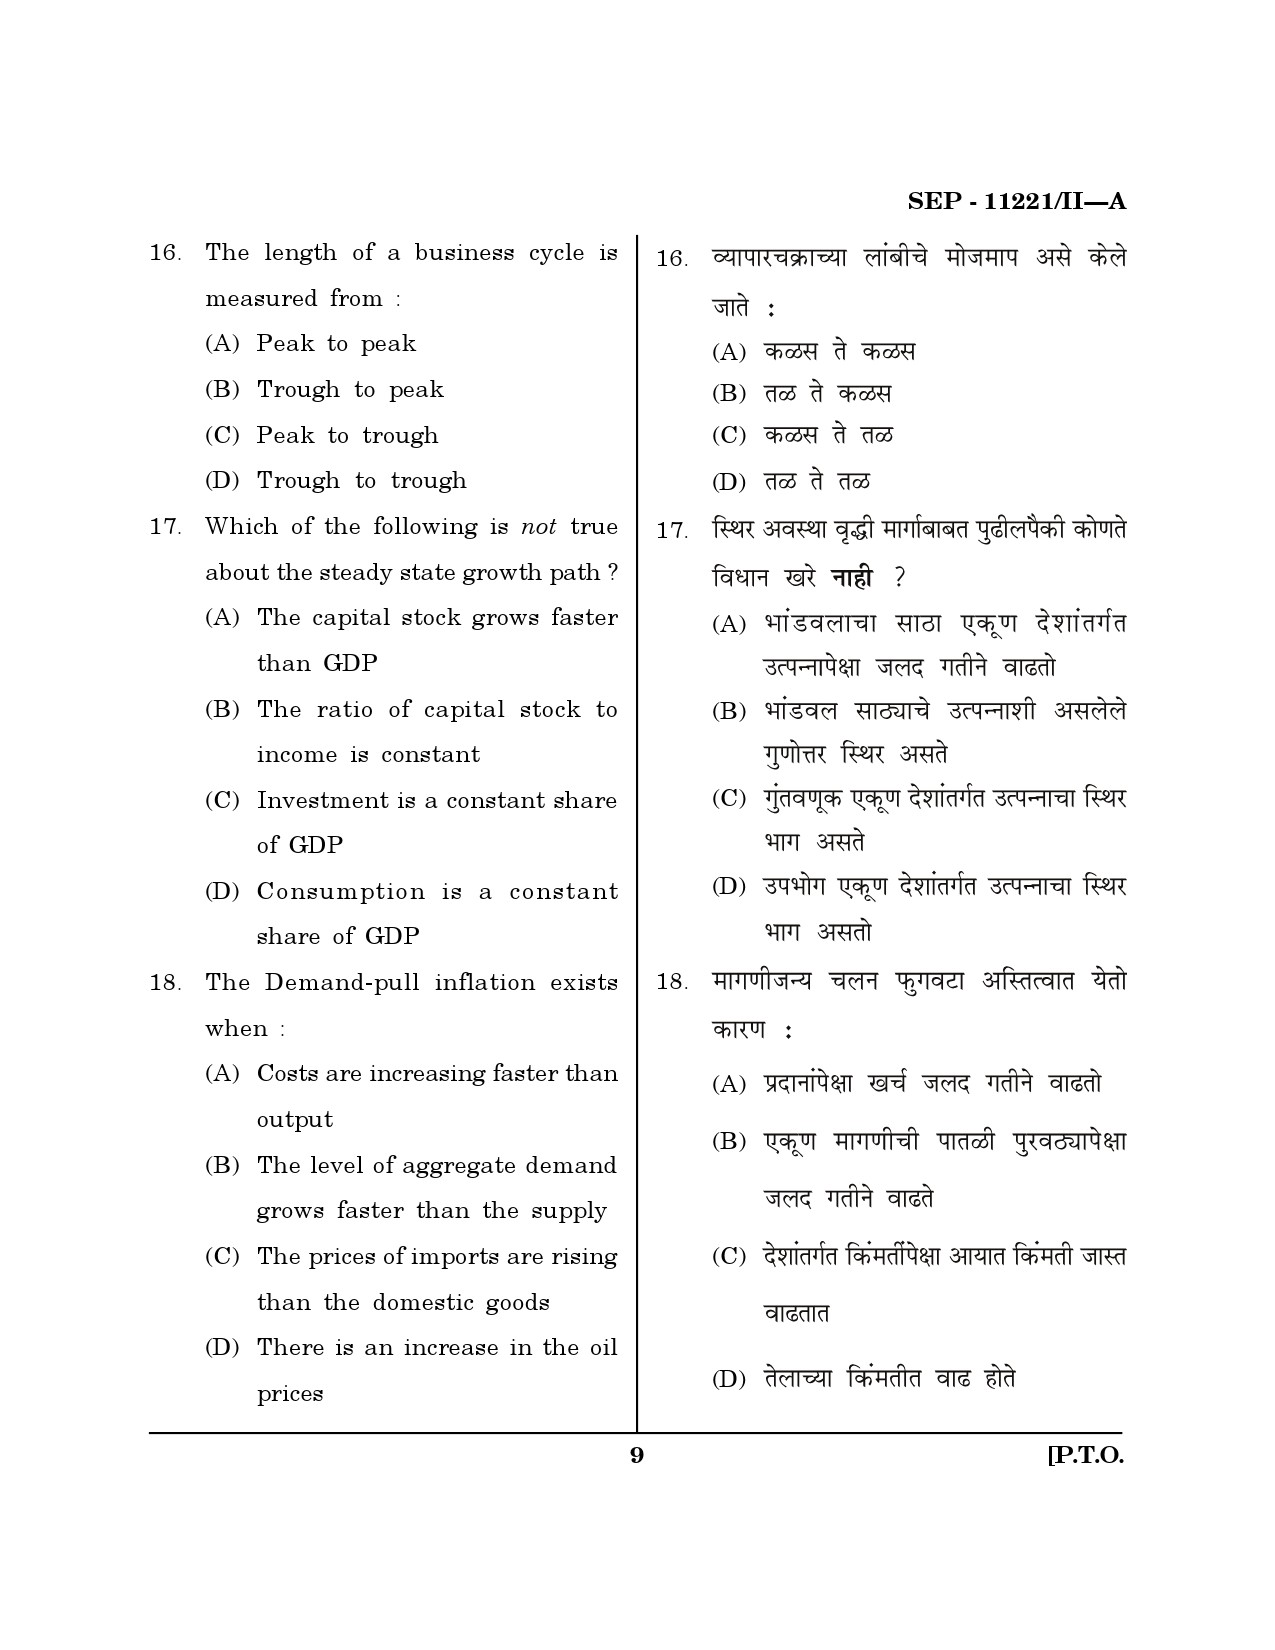 Maharashtra SET Economics Exam Question Paper September 2021 8